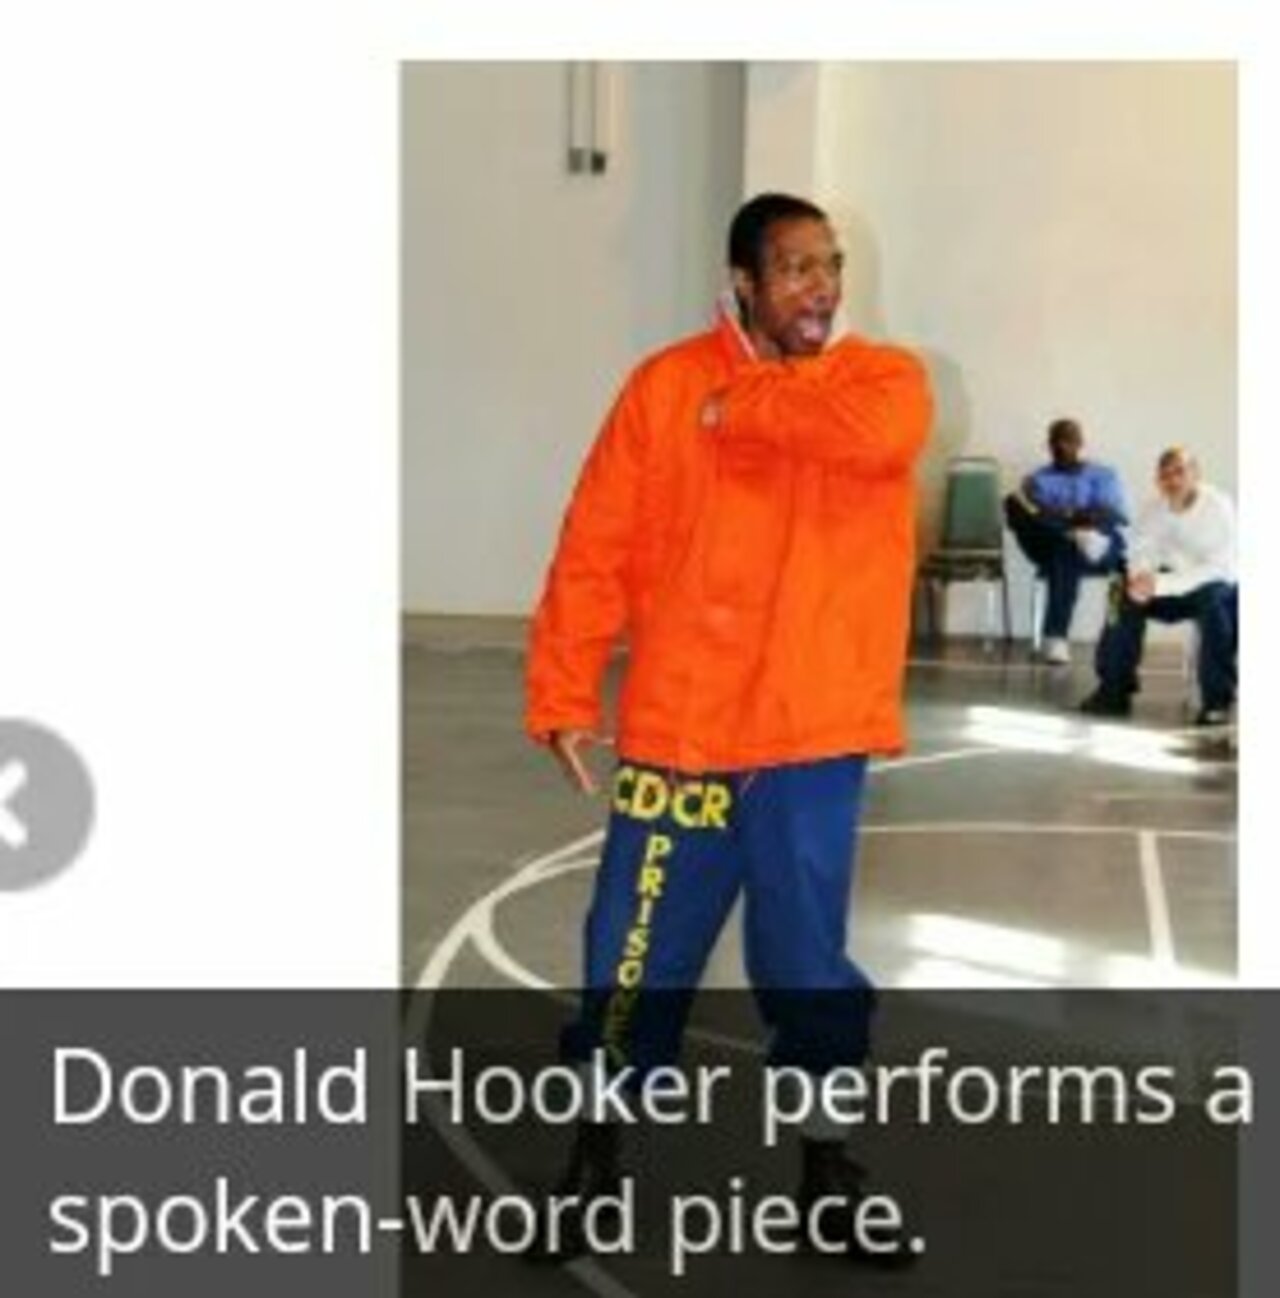 Prisoner-Performing Artist, Donald "C-Note" Hooker, Ontario Why He Wrote Performance Poetry, 'Can't Black Lives Matter Too???' See Posts (link: https://plus.google.com/116045787026747138393/posts/3hTWJTy6jSV) http://plus.google.com/11604578702674… #cut50 #artsinprison #art4justicefund #BlackLivesMatter #poet #spokenword #artist https://t.co/nzCfk9WP9X